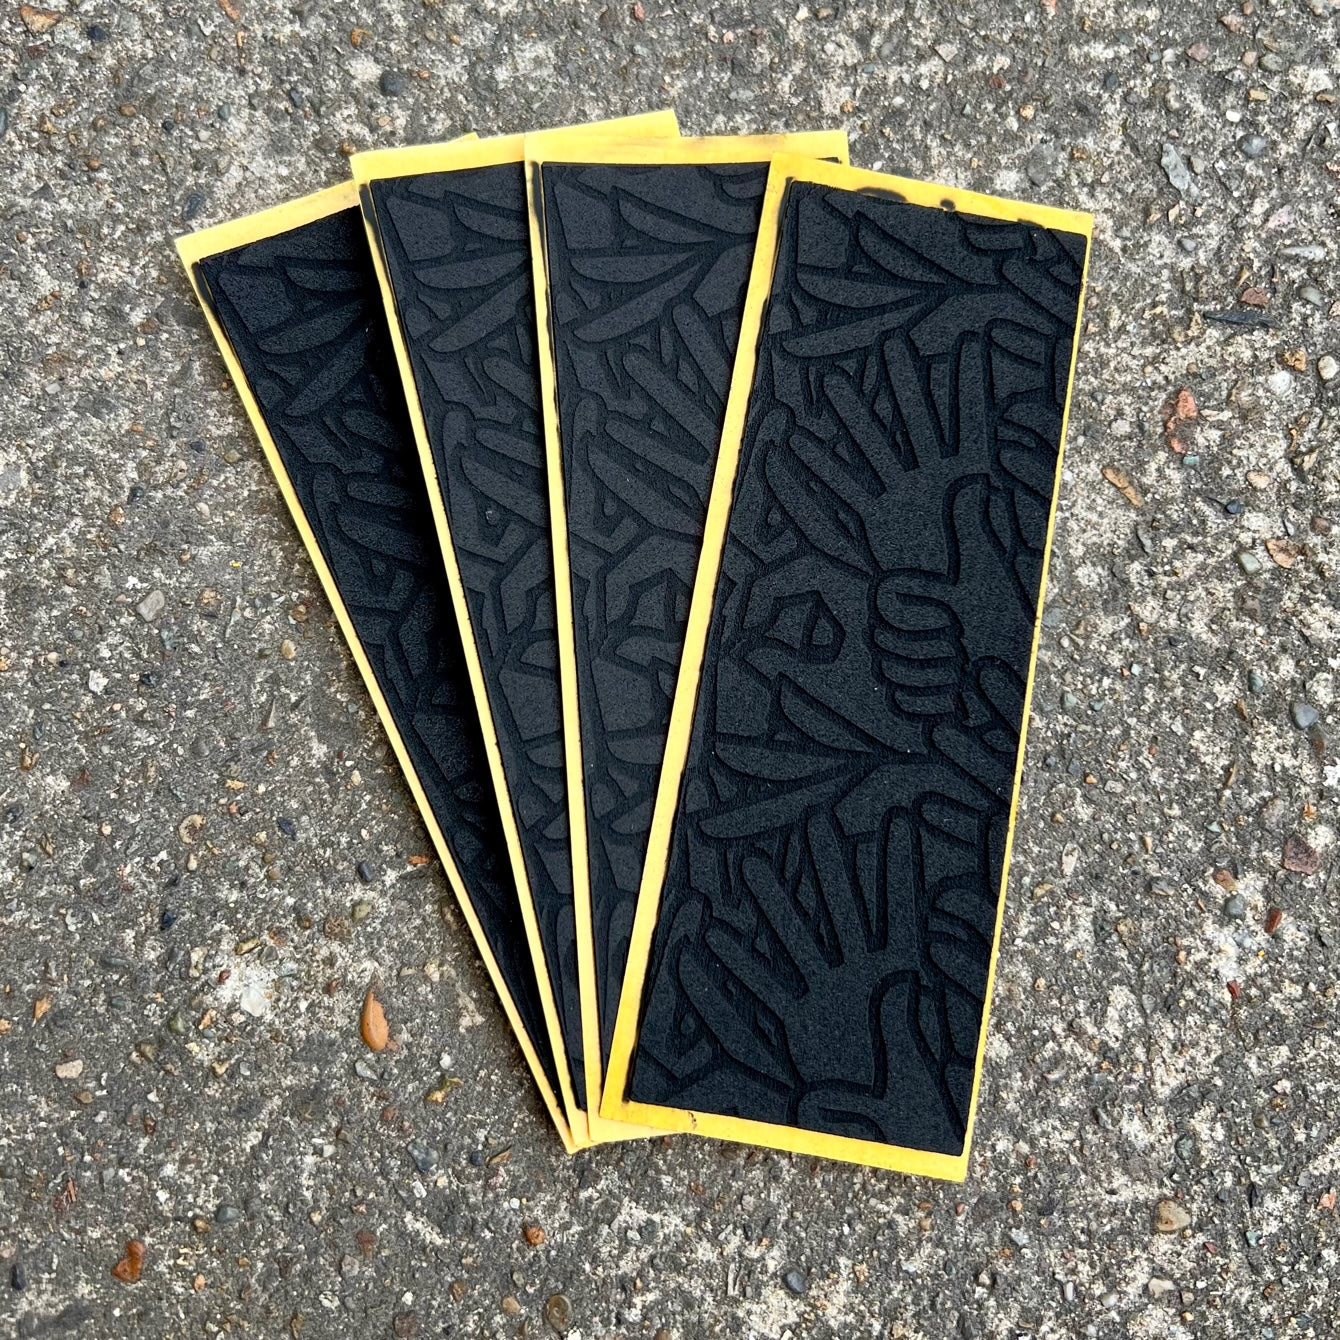 DK FB - 'Hands' Engraved Foam Tape 4 pack